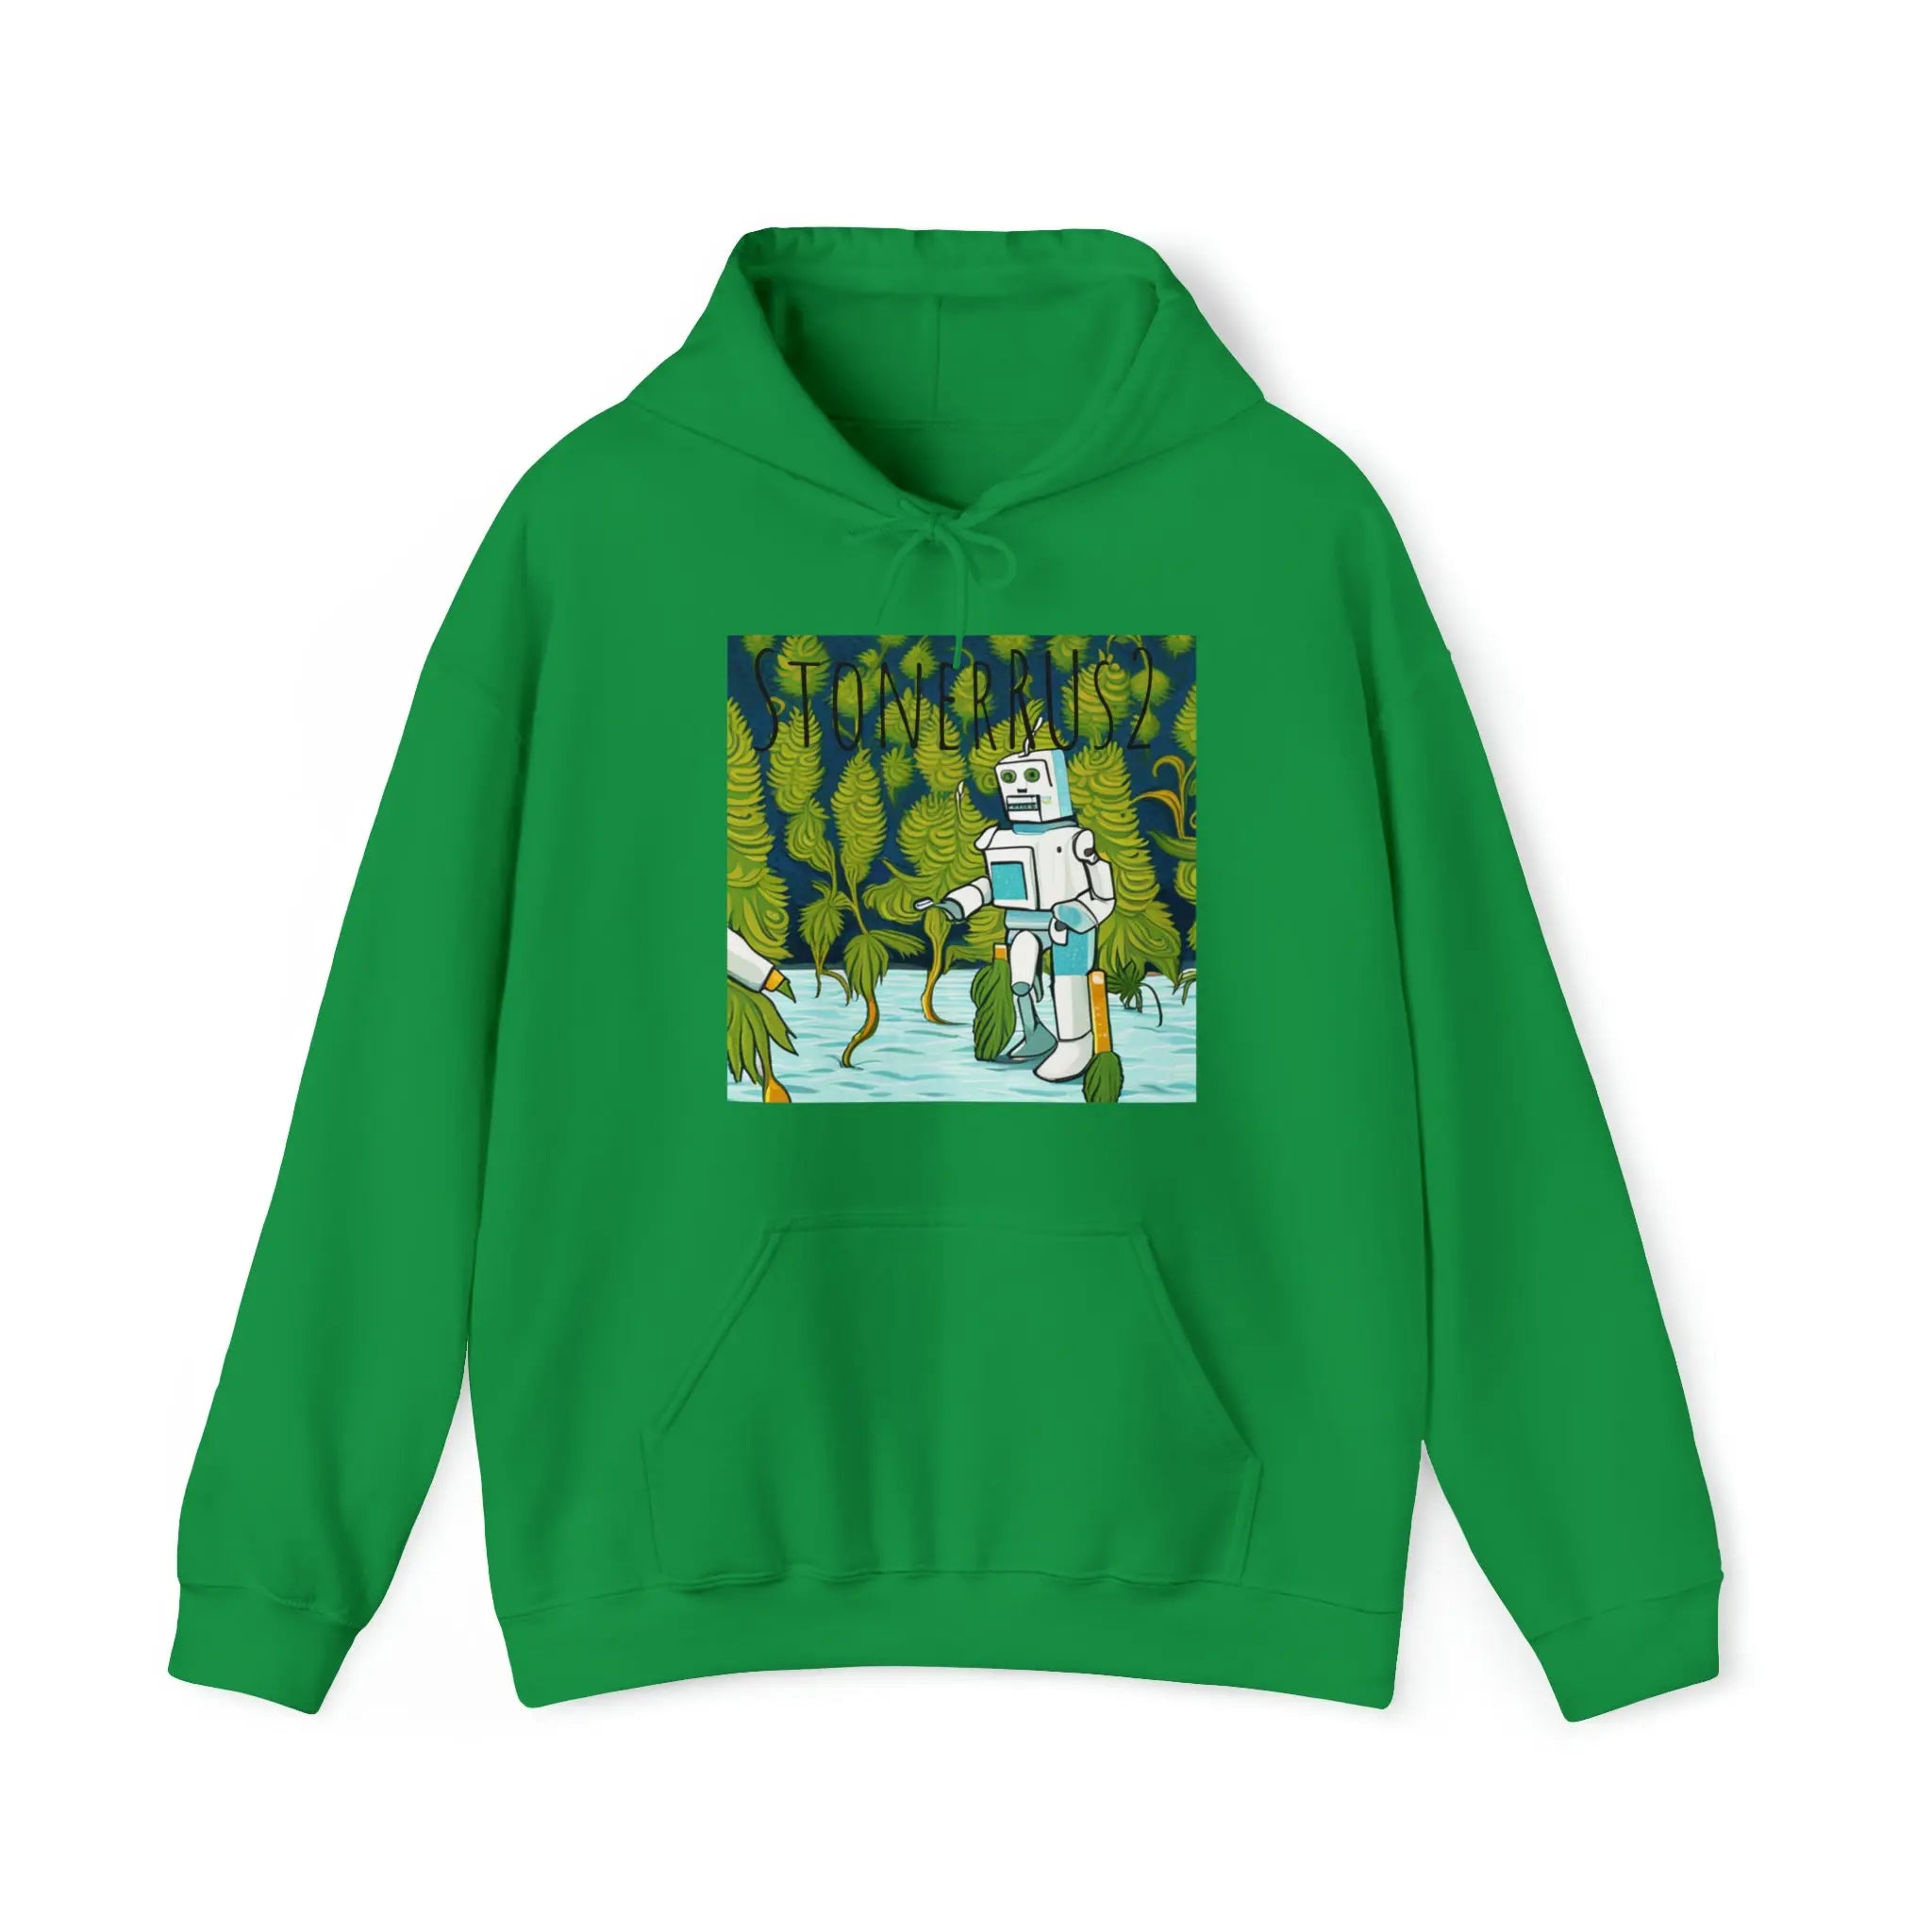 StonersR Us2  Hooded Sweatshirt Printify